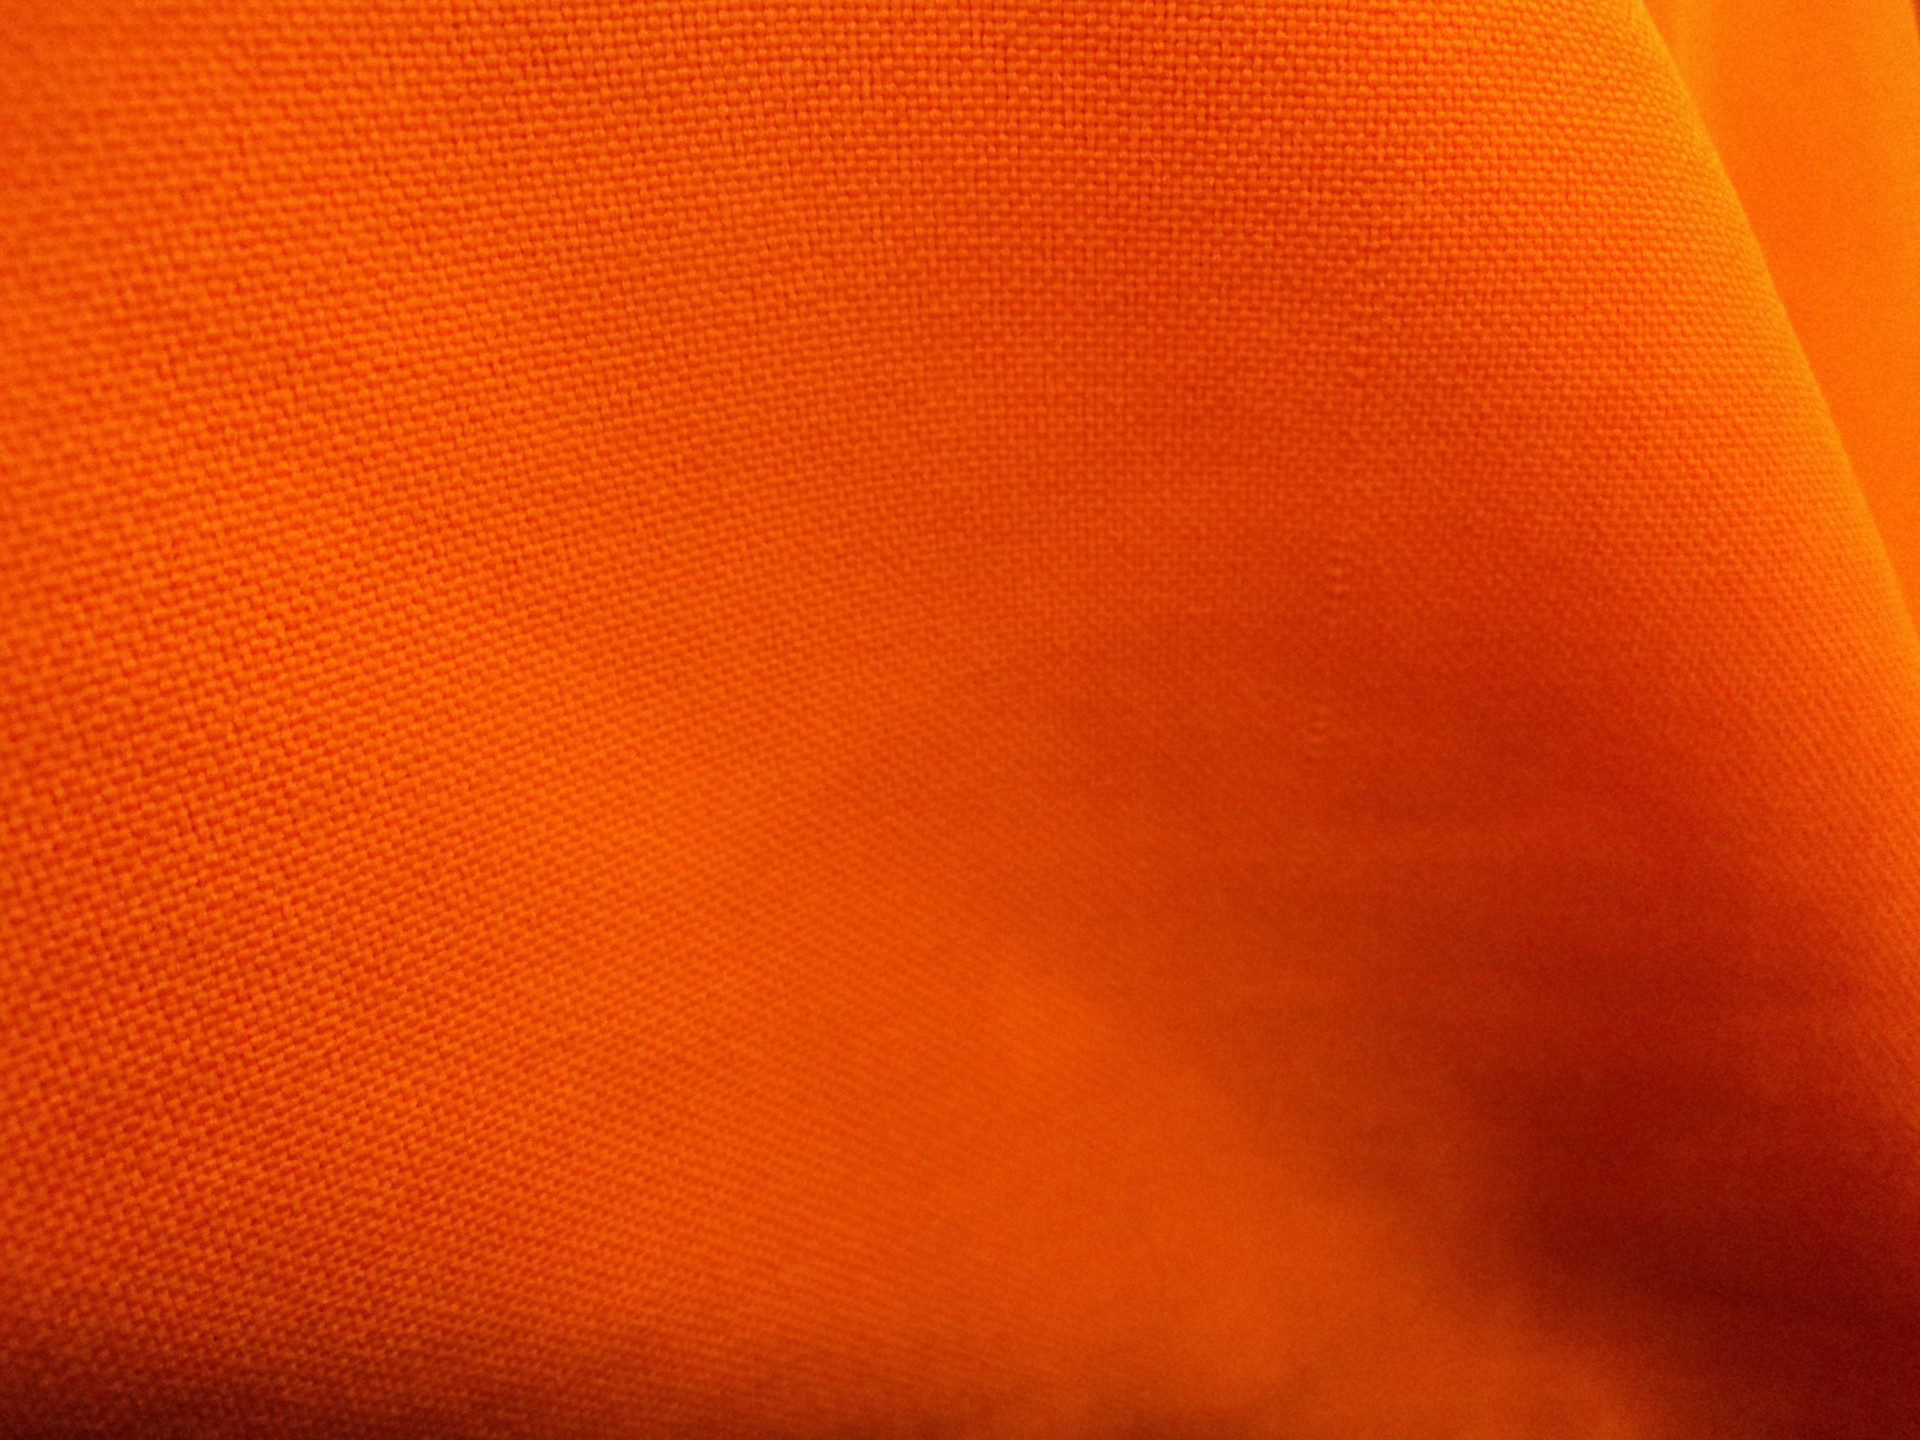 Oranžinė,  Tekstilė,  Fonas,  Oranžinis & Nbsp,  Tekstilės & Nbsp,  Fonas,  Oranžinė & Nbsp,  Tekstilė,  Oranžinė & Nbsp,  Fonas